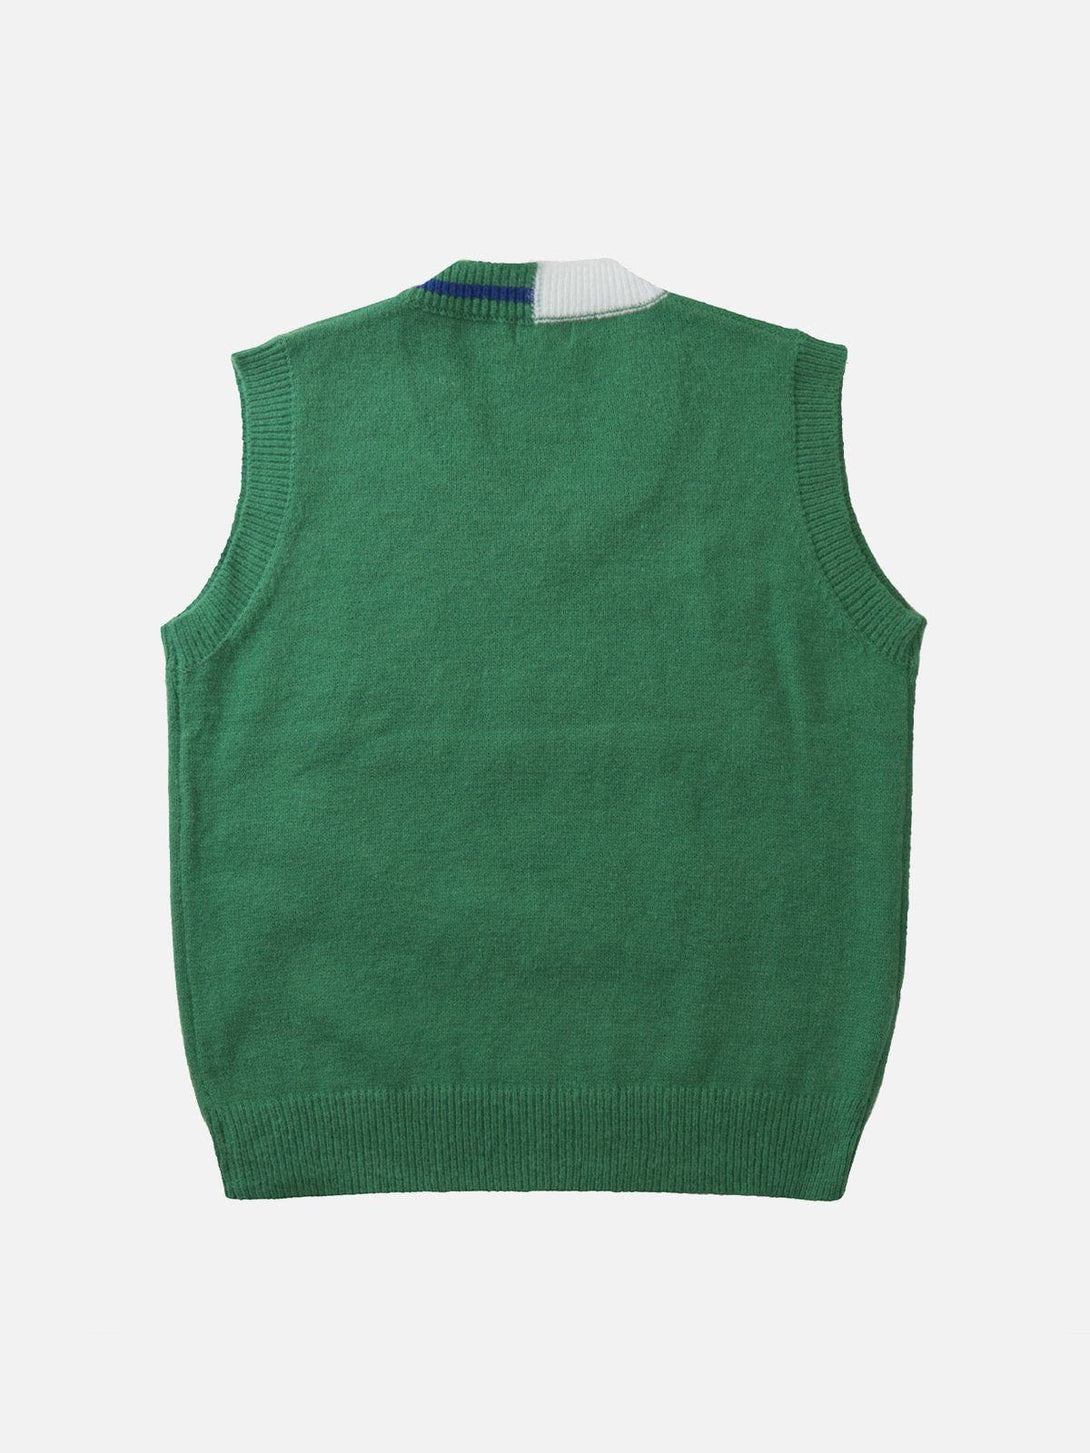 Levefly - Colorblock Line Letter Sweater Vest - Streetwear Fashion - levefly.com